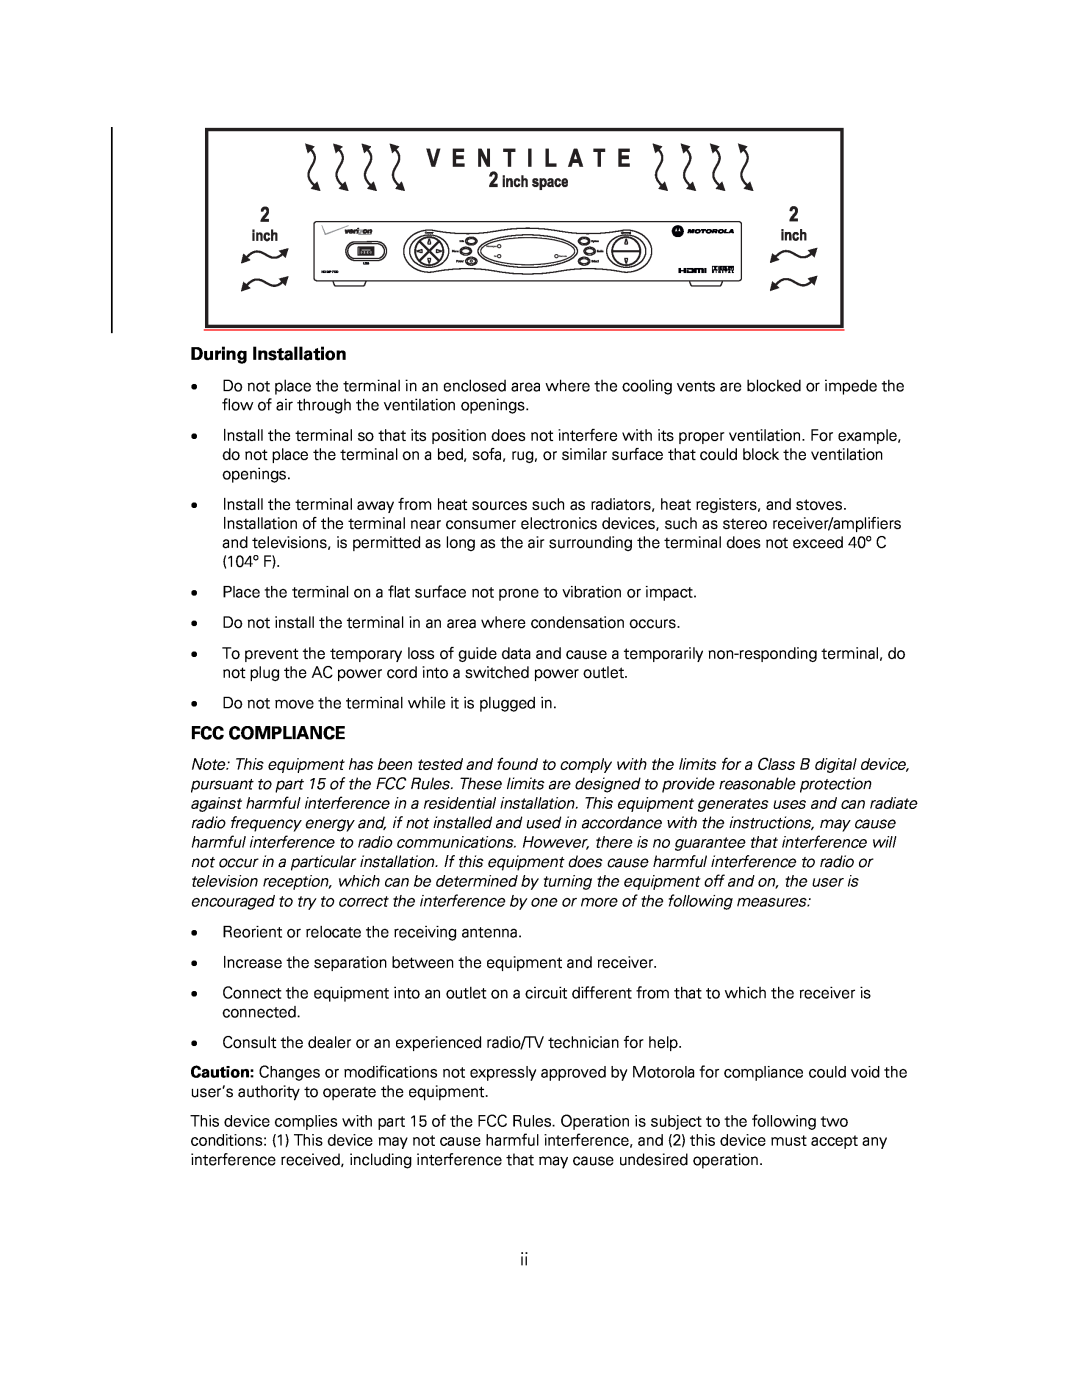 Motorola QIP7100 operation manual During Installation, Fcc Compliance 